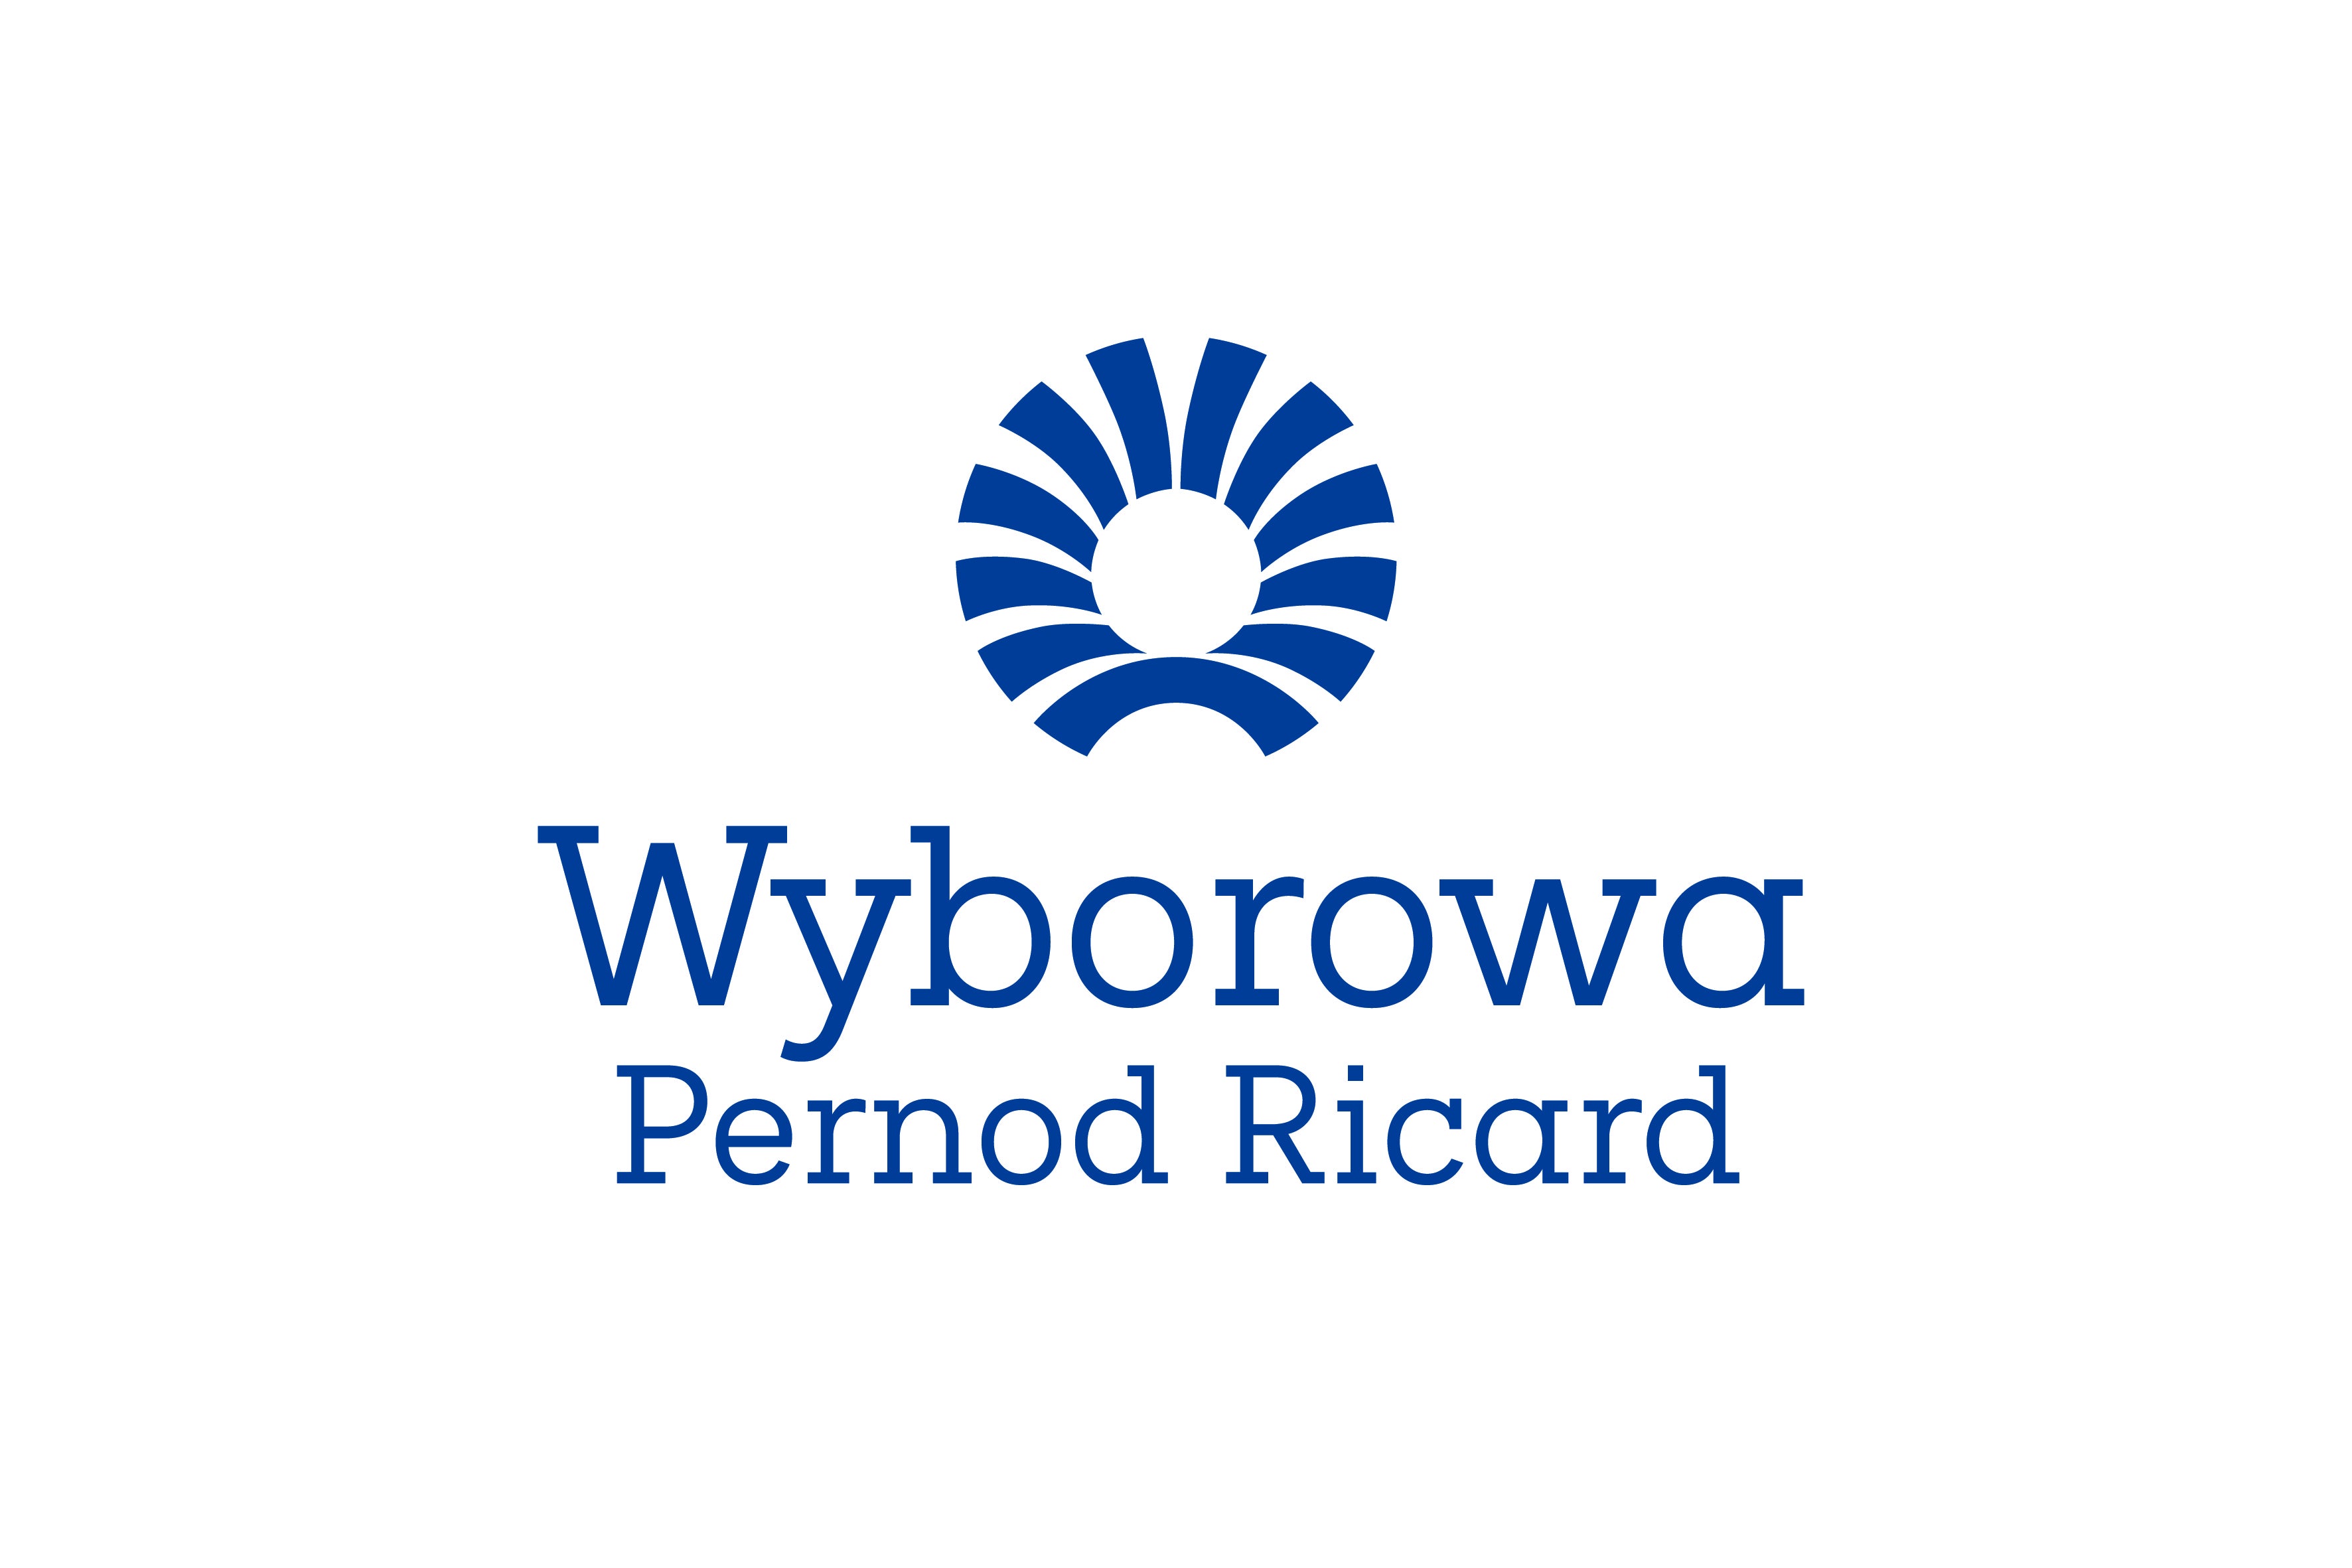 Wyborowa Pernod Ricard logo